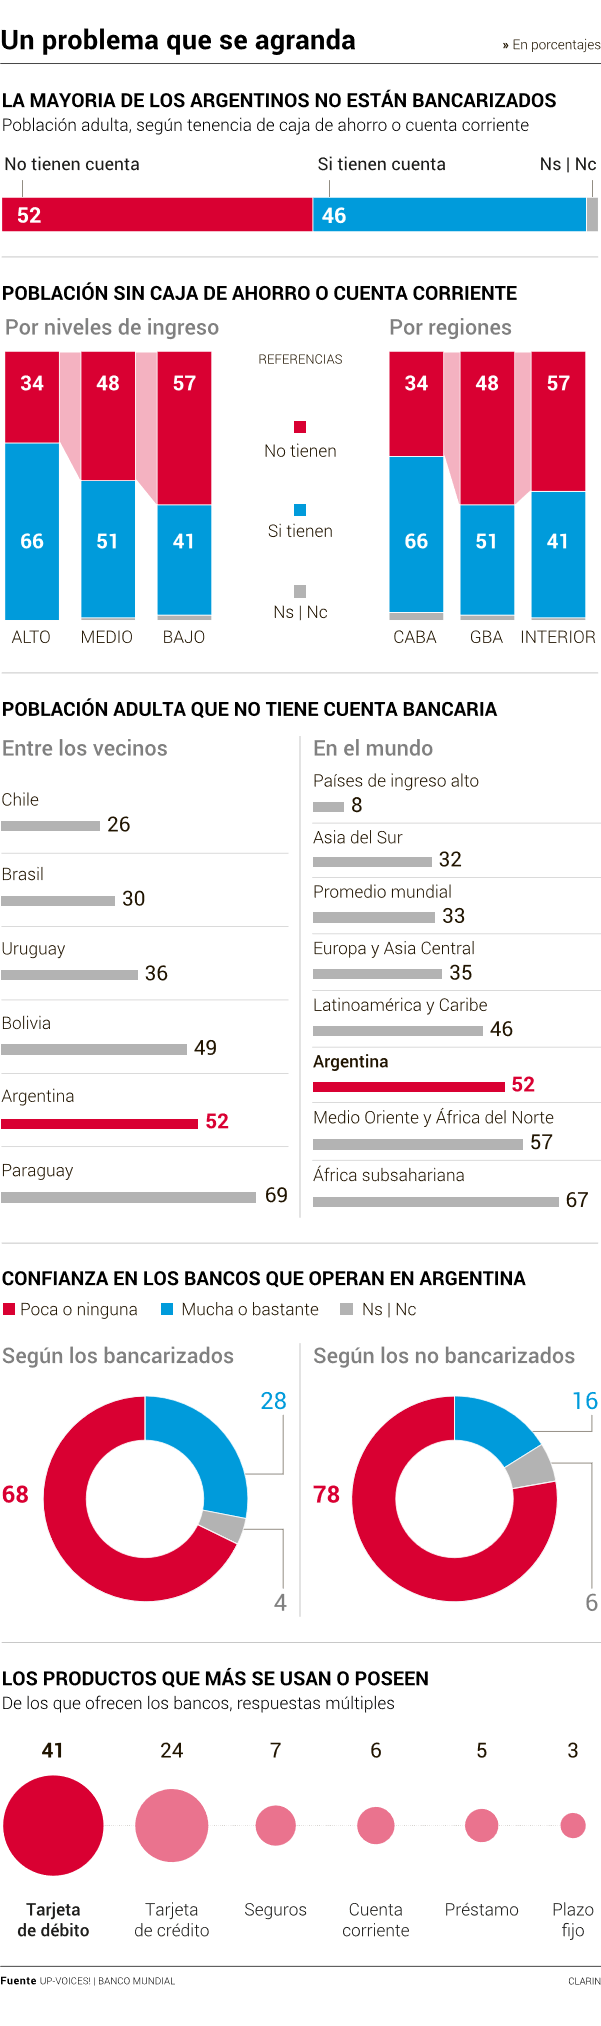 nota mayoria argentinos no bancarizados
